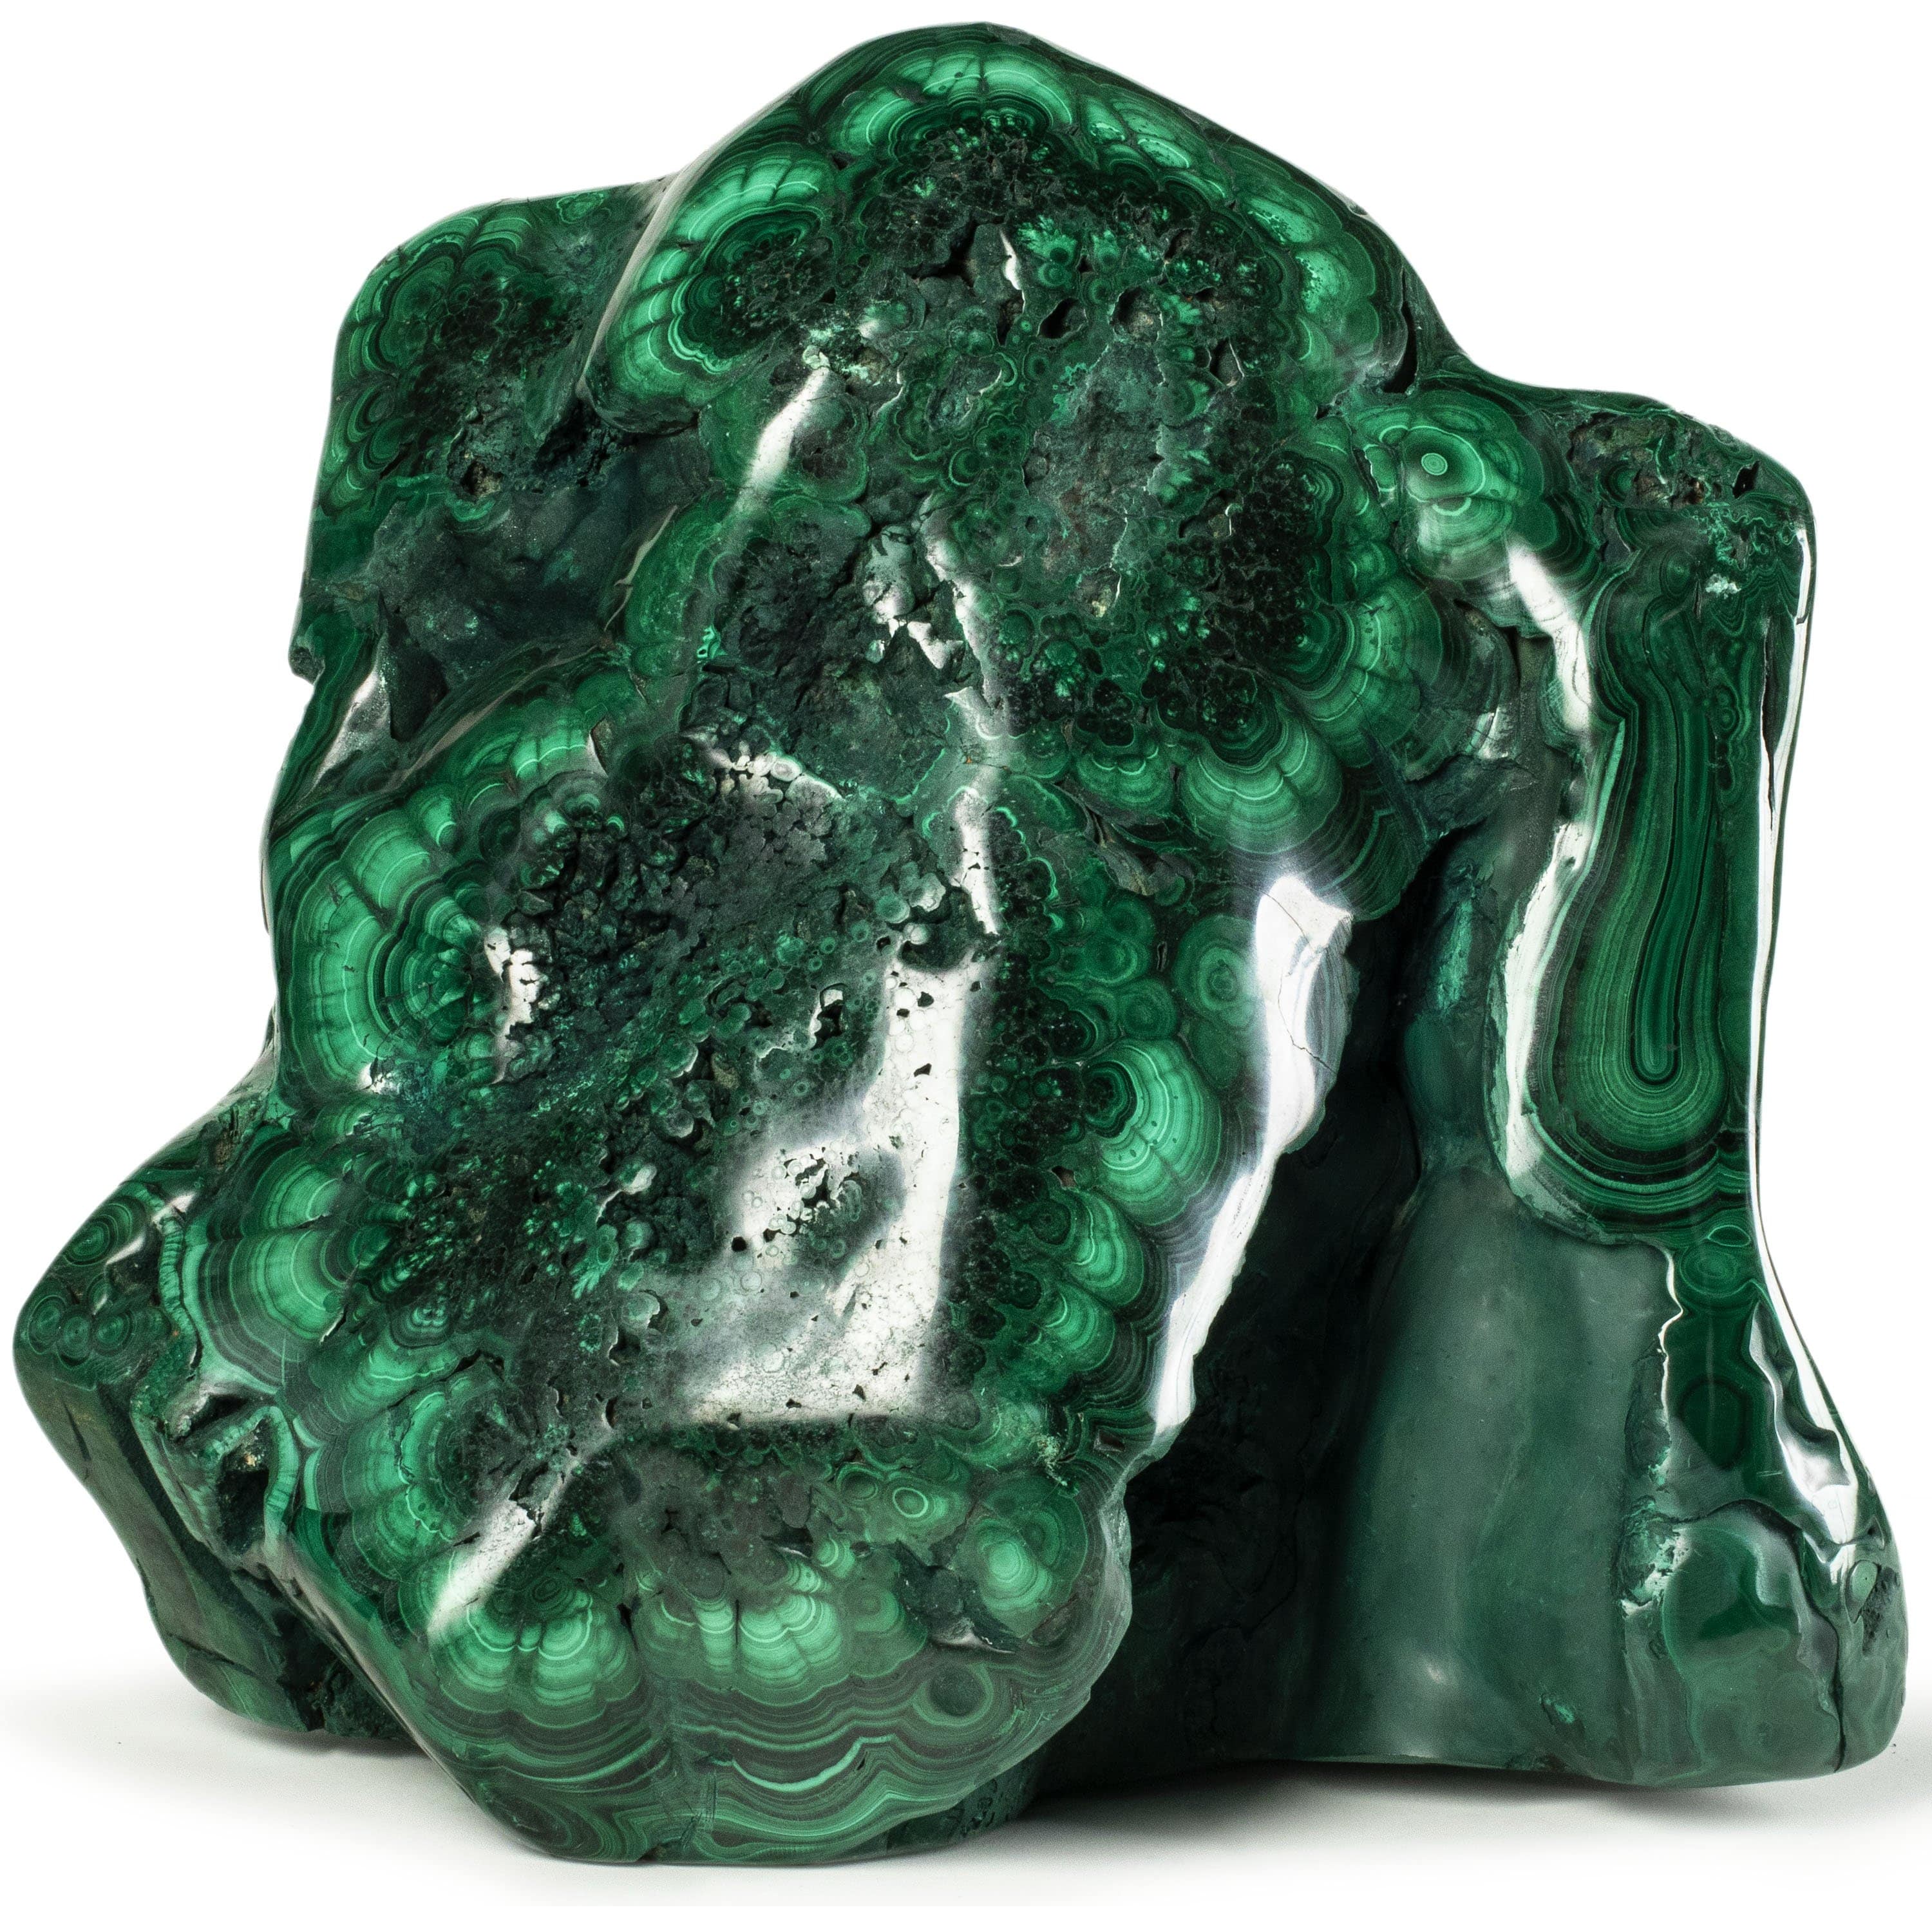 Kalifano Malachite Rare Natural Green Malachite Polished Freeform Specimen from Congo - 32.2 kg / 71 lbs MA24000.002